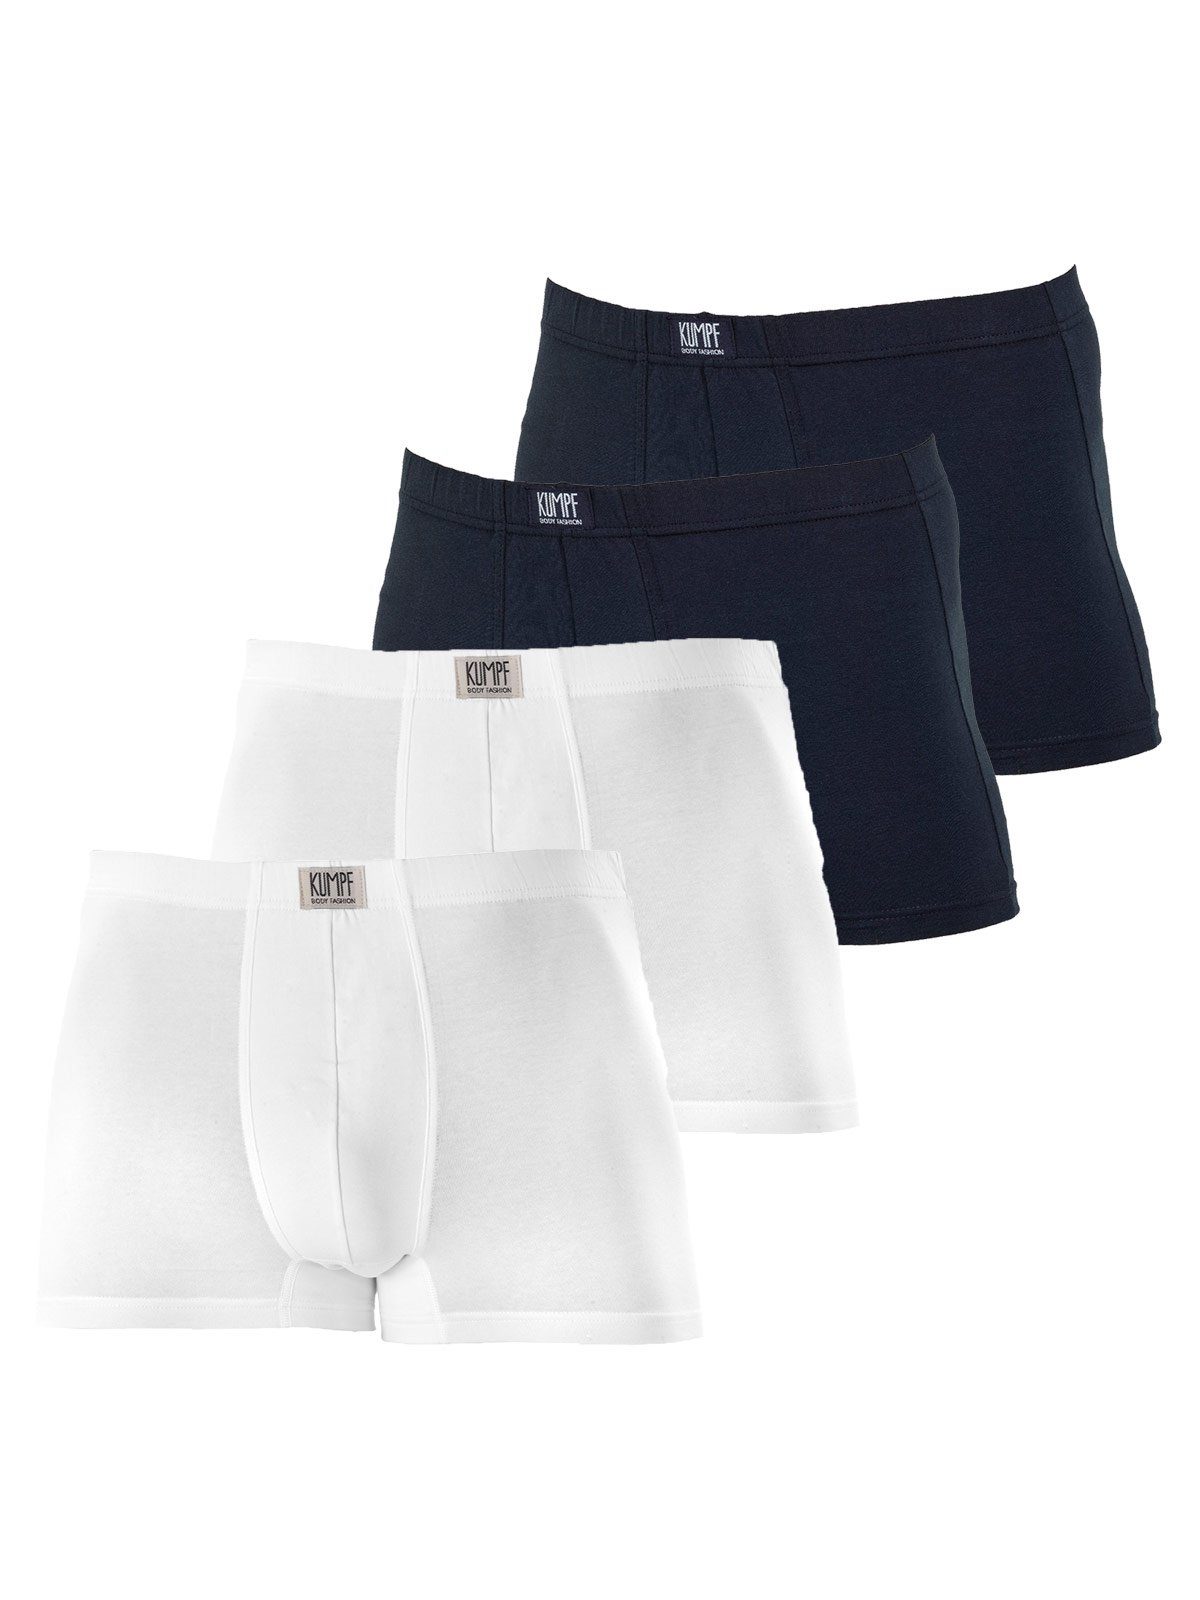 KUMPF Retro Pants 4er Sparpack navy hohe Herren 4-St) Markenqualität Bio (Spar-Set, Cotton Pants weiss